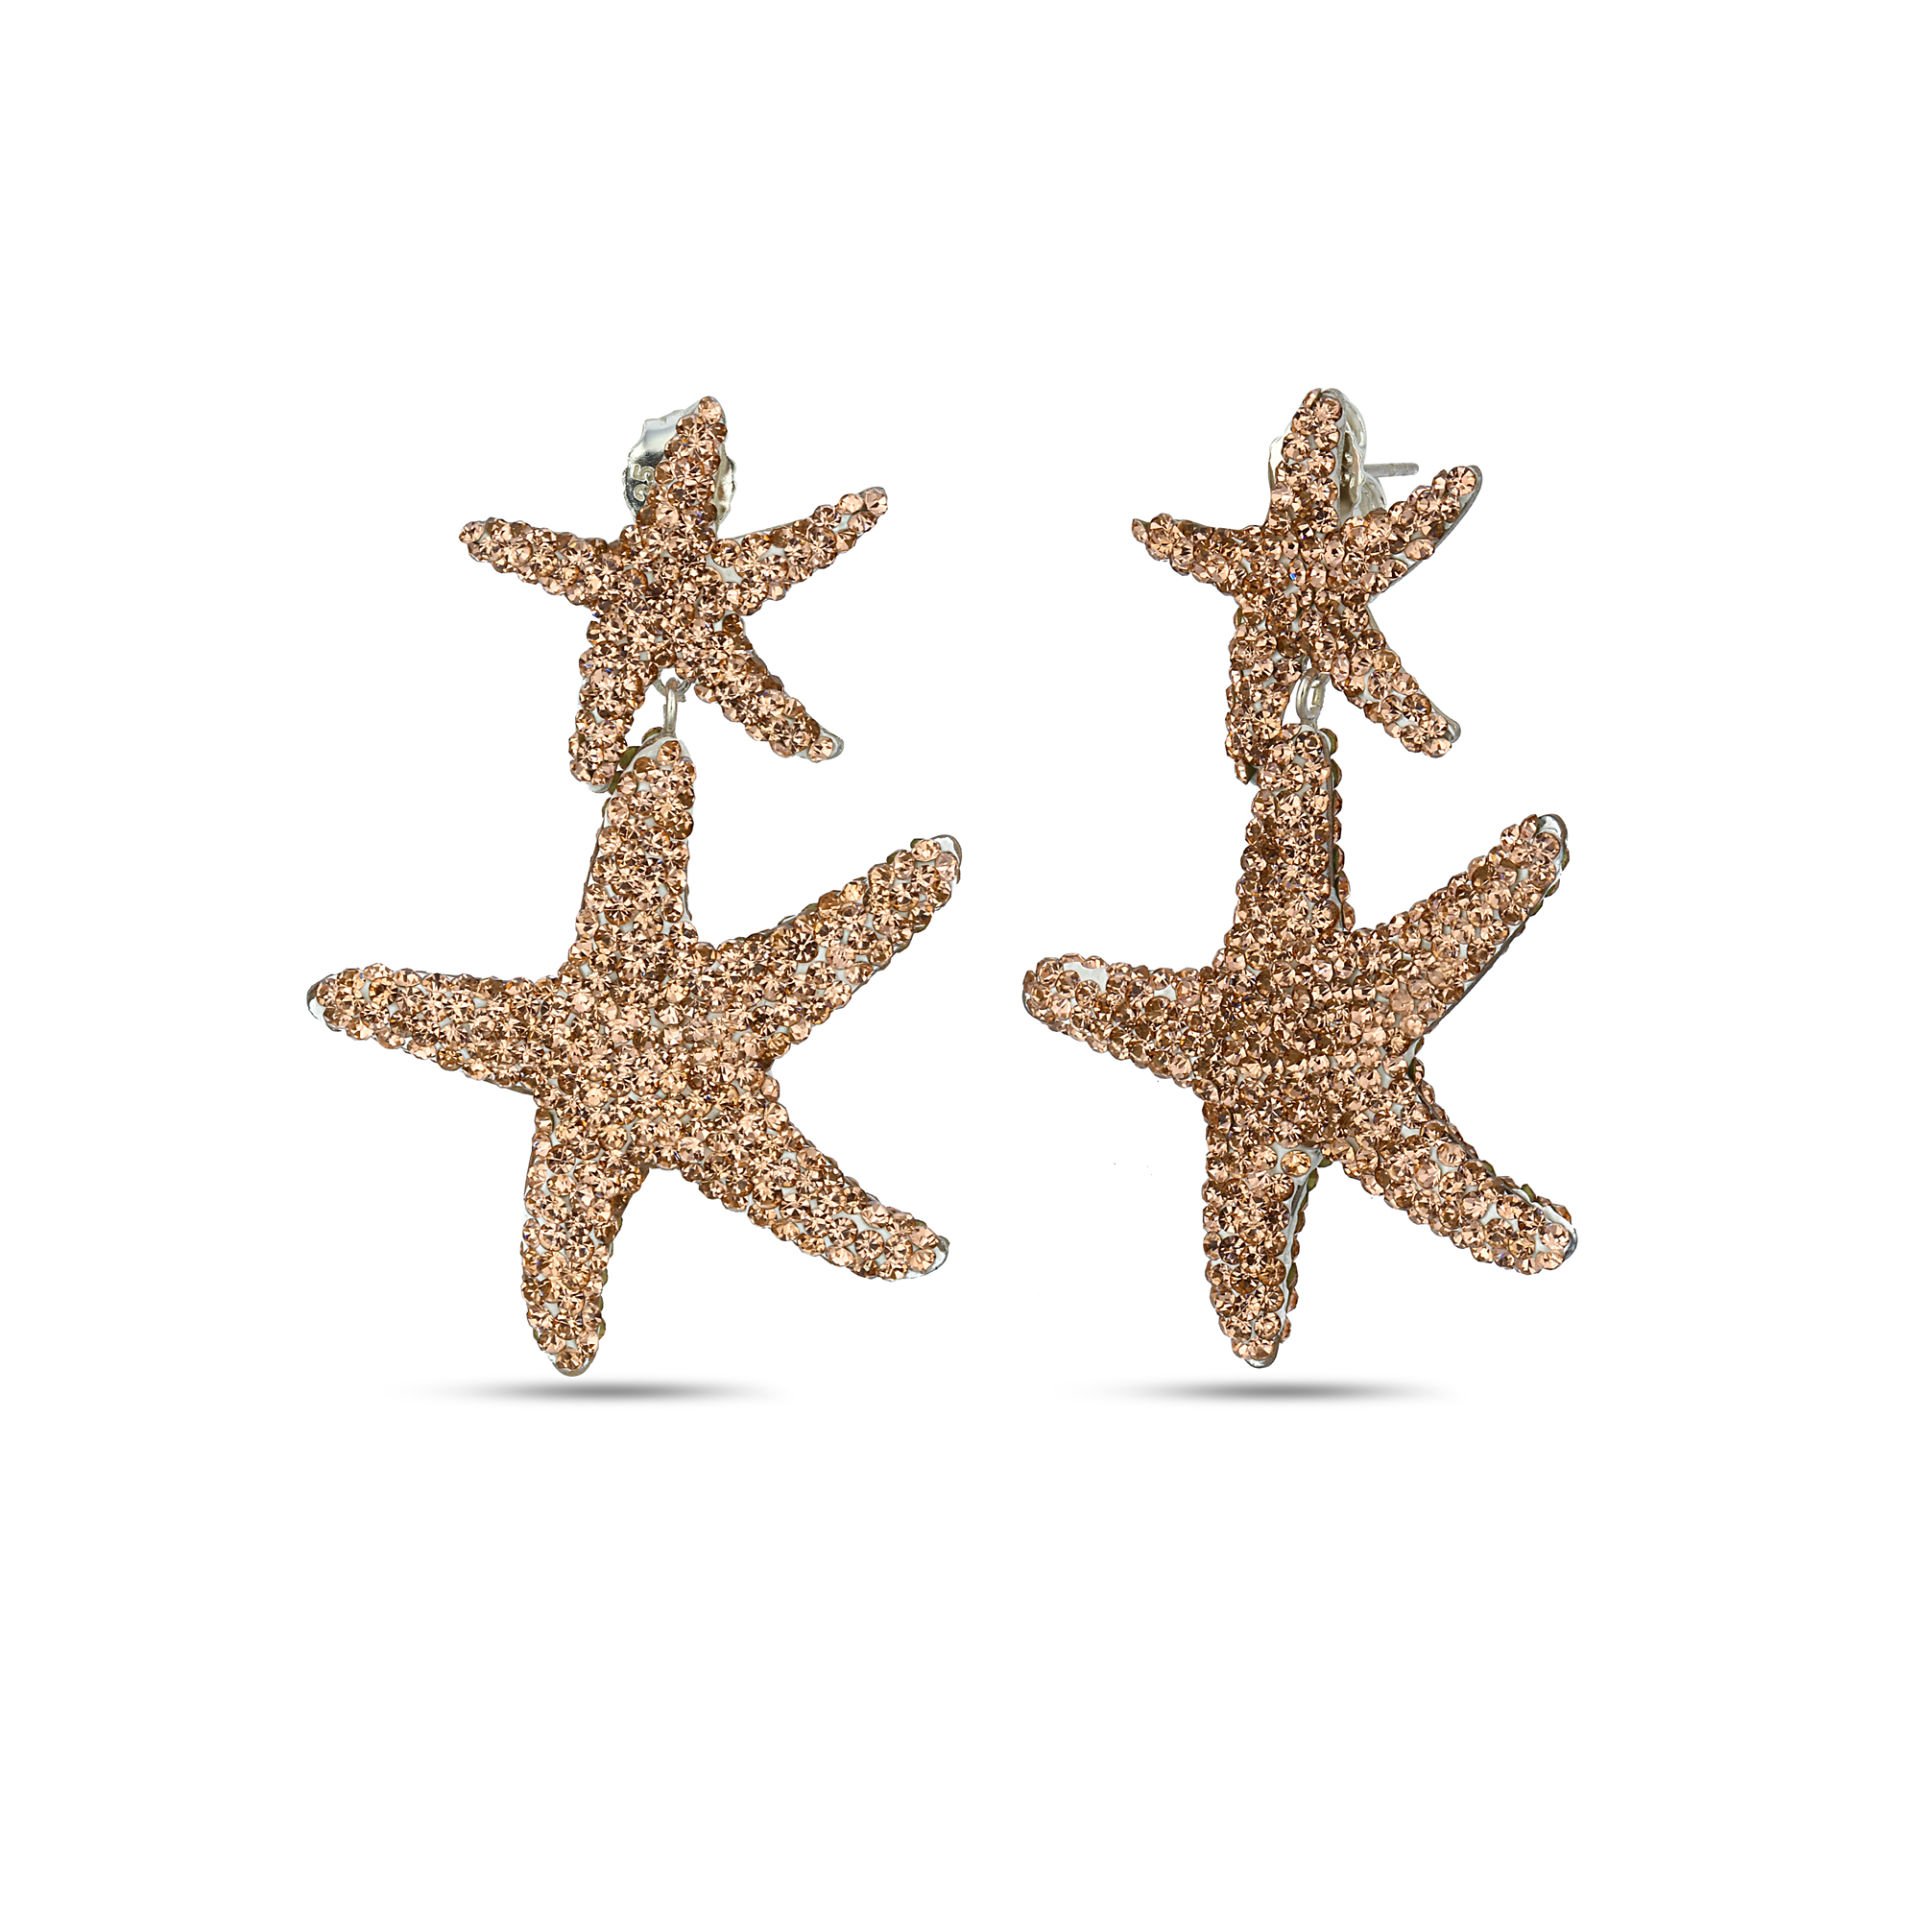 Royal Crystal Sea Star Earrings